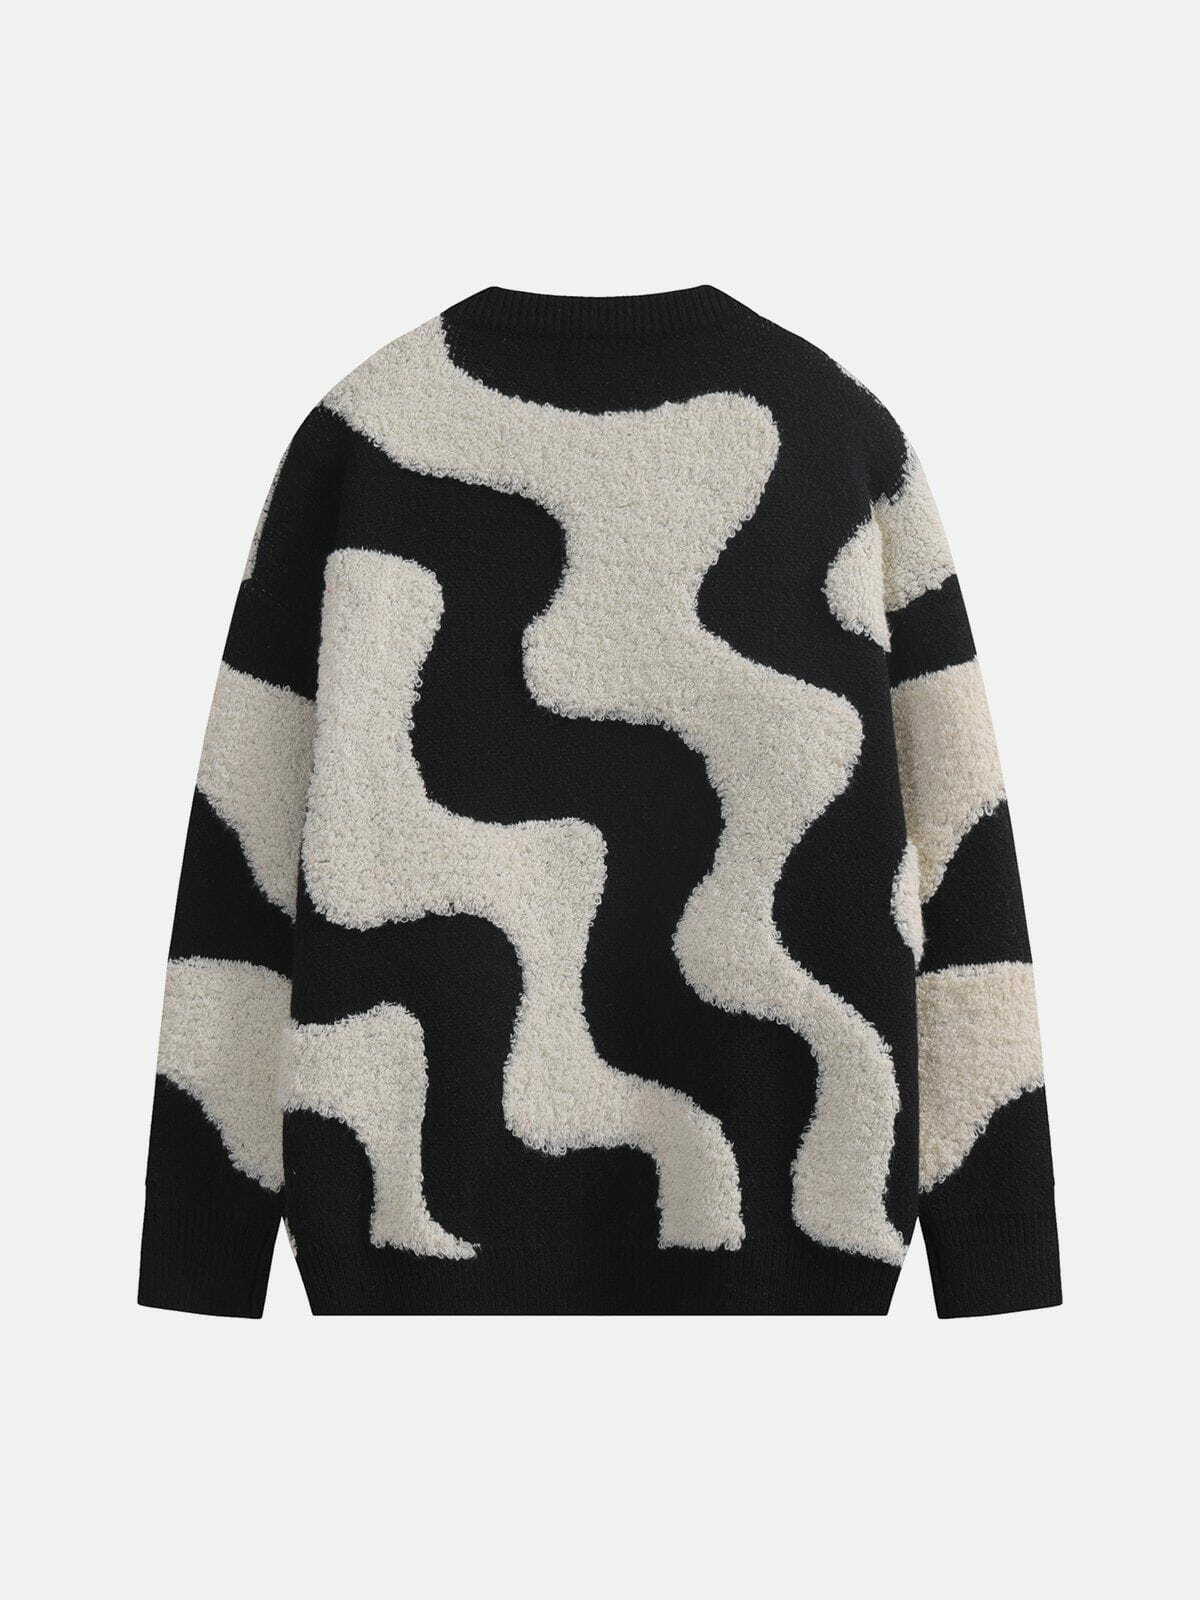 y2k flocking sweater edgy design & retro vibes 3929